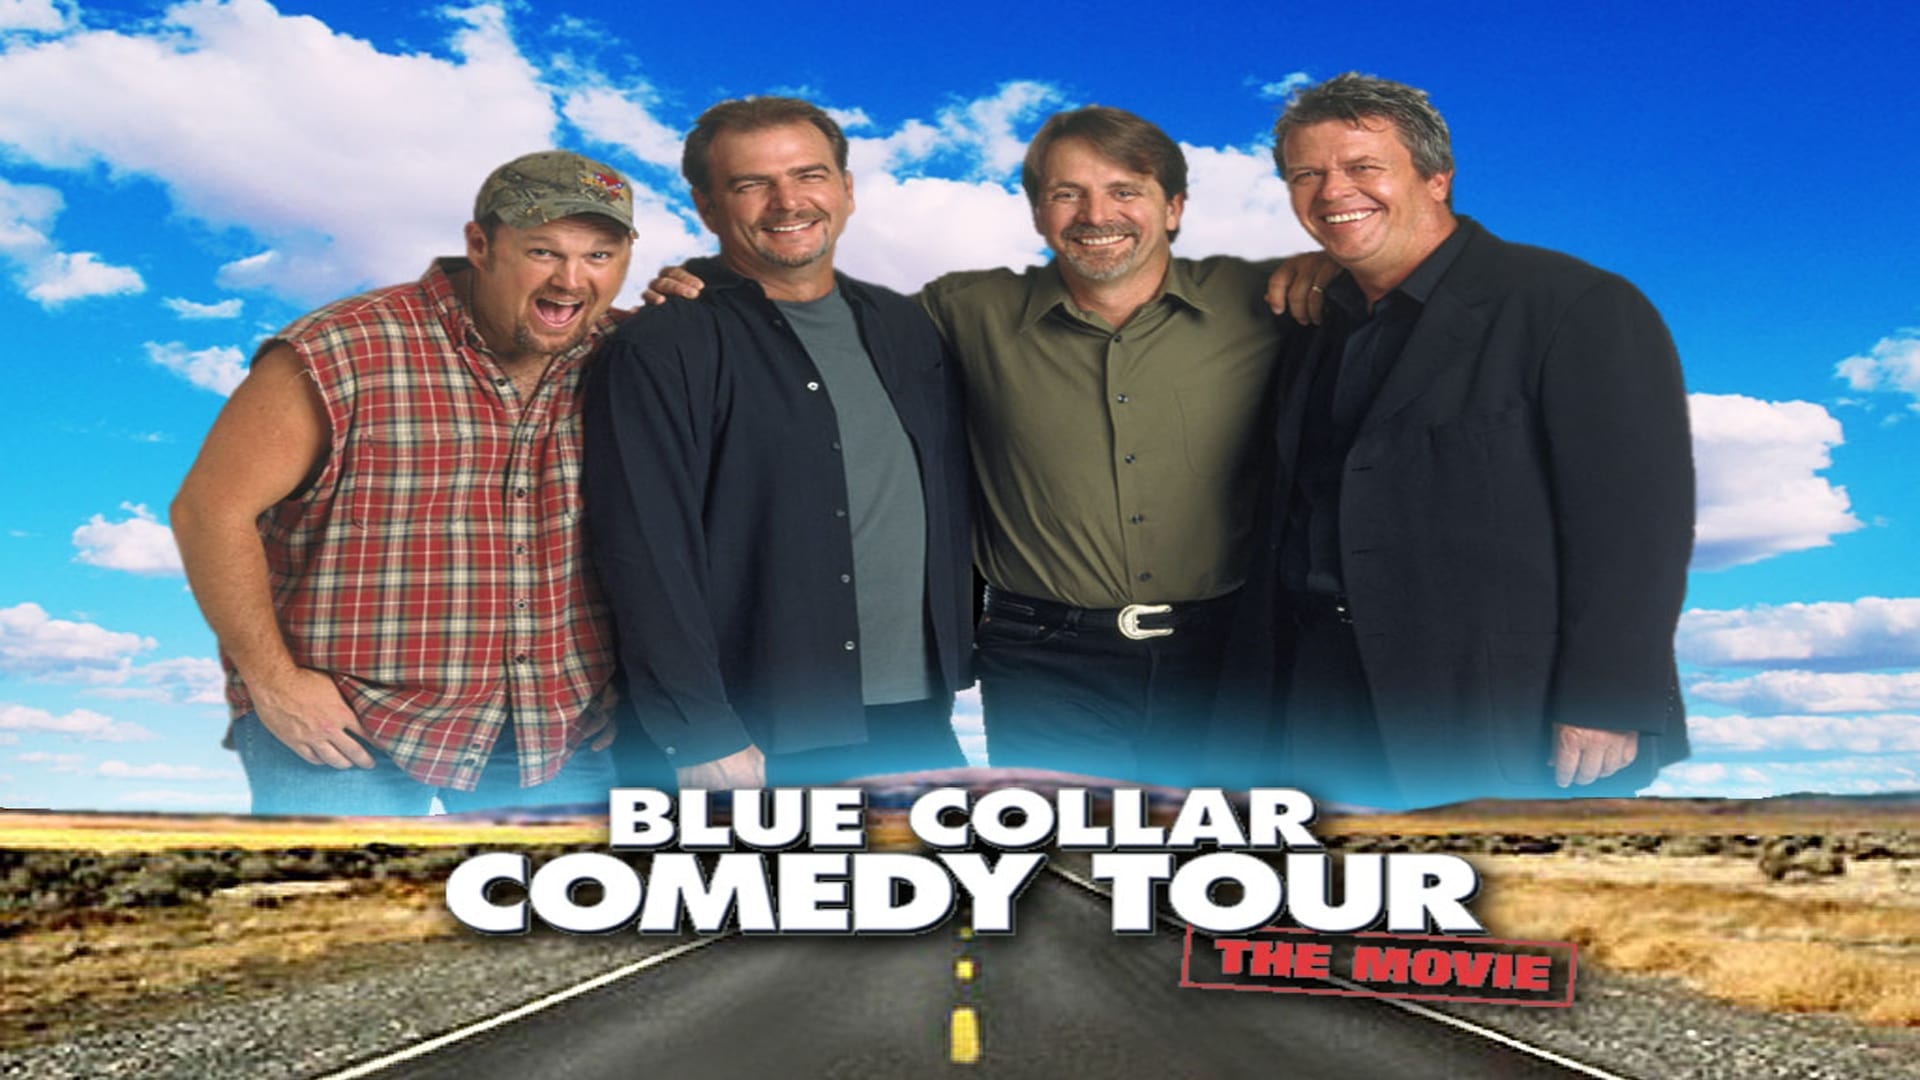 Blue Collar Comedy Tour: The Movie (2003)